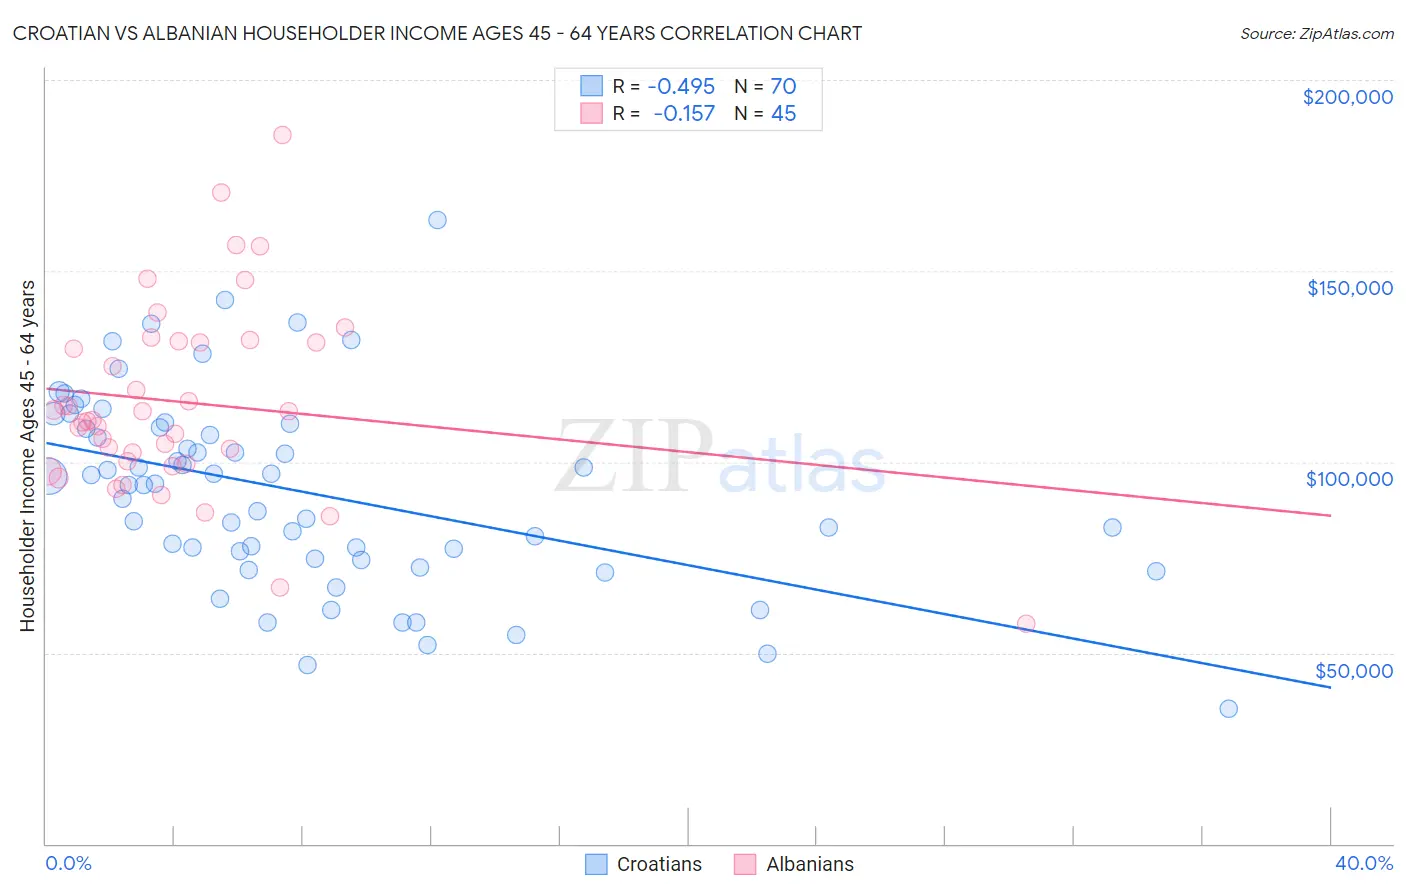 Croatian vs Albanian Householder Income Ages 45 - 64 years